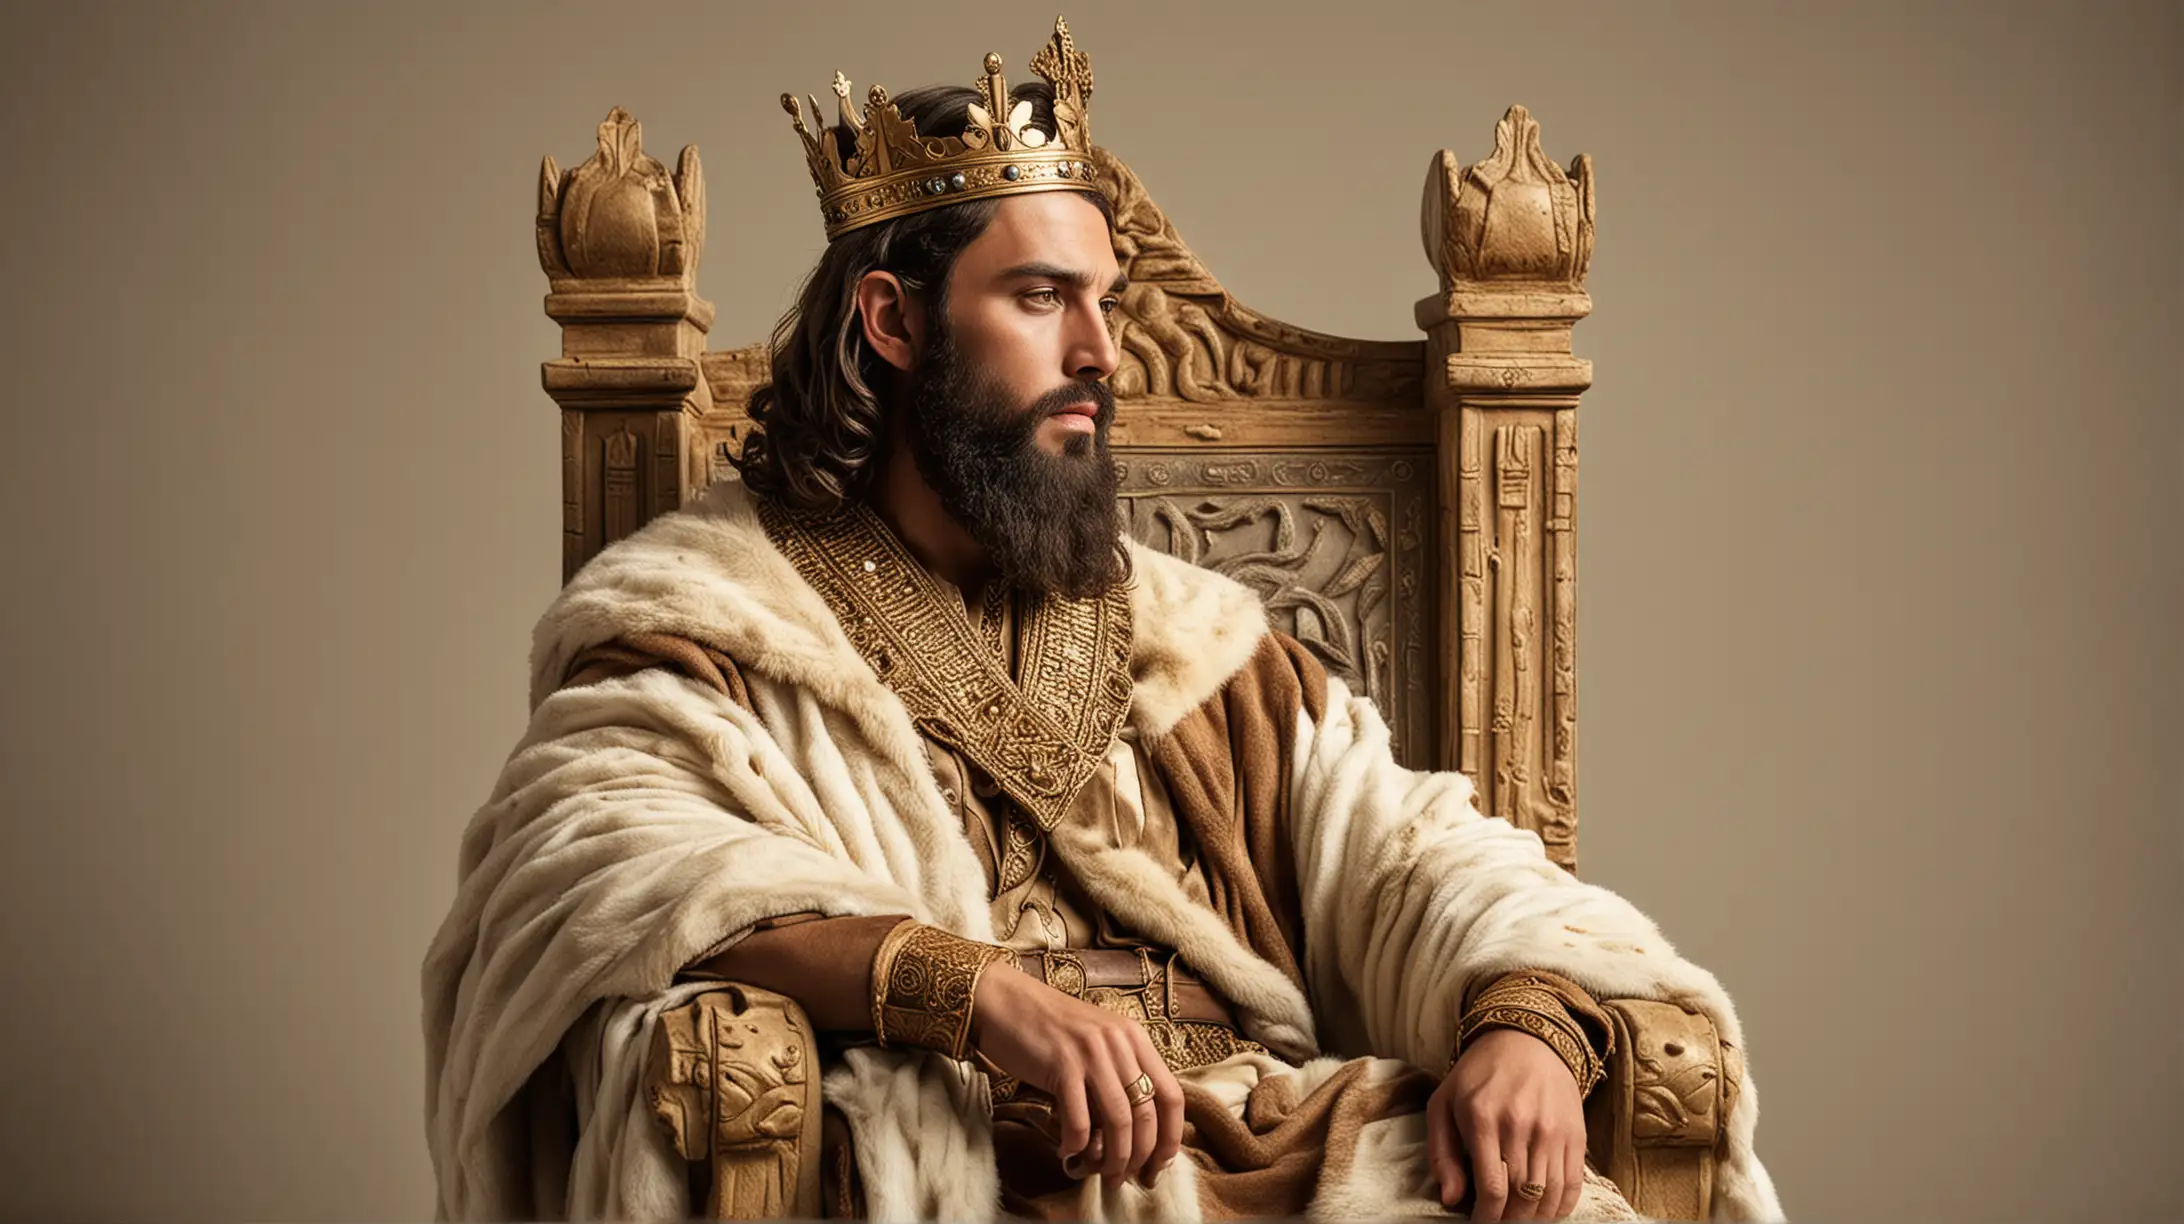 Biblical Era King Sitting on Throne Profile View